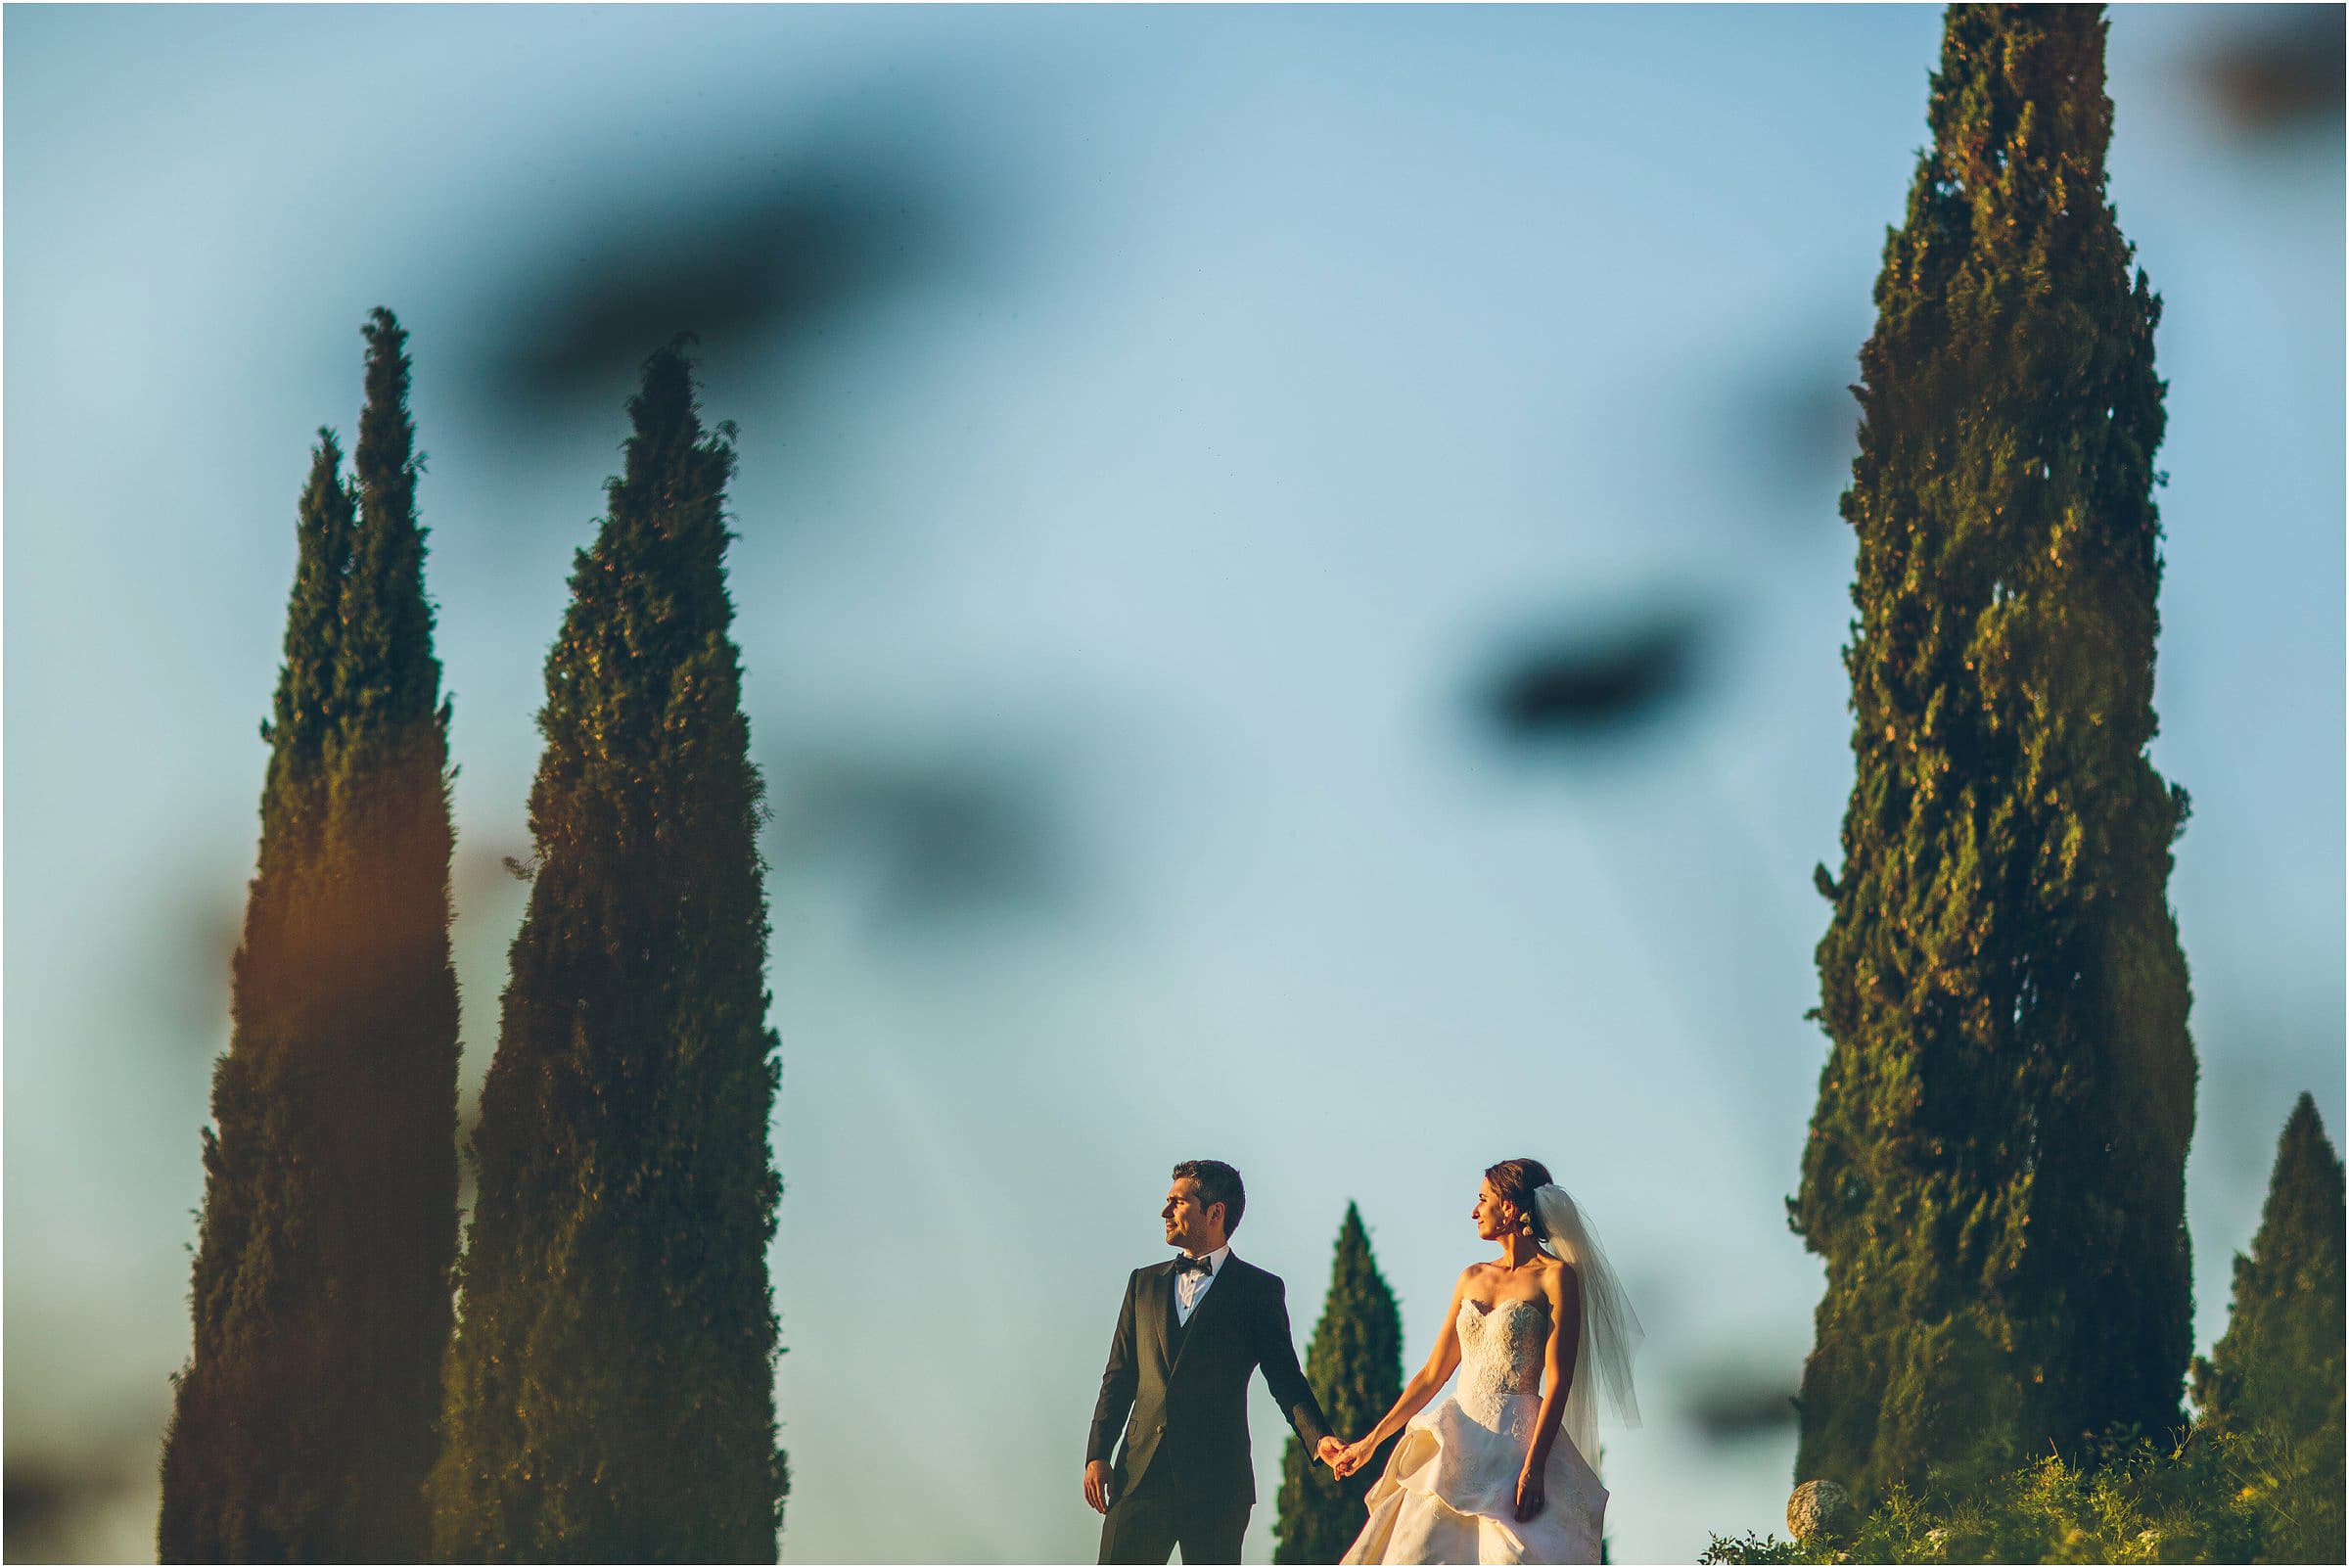 Destination wedding photograph in the tall trees at Castello di Vicarello in Tuscany